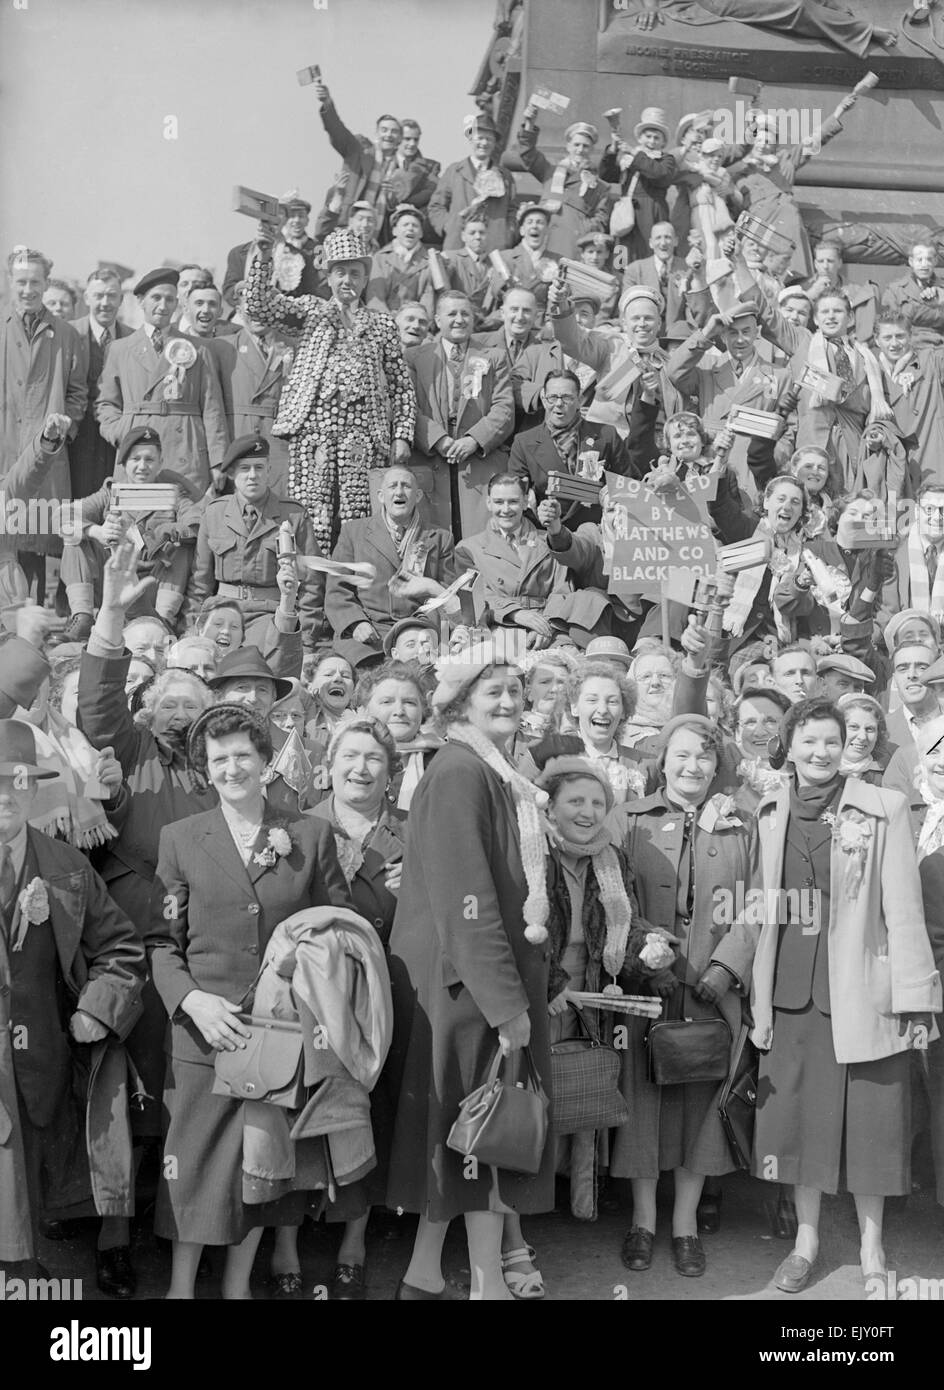 Blackpool V Bolton-FA-Cup-Finale 2. Mai 1953. Blackpool Fußballfans sammeln auf dem Trafalgar Square vor dem Spiel im Wembley-Stadion. Stockfoto